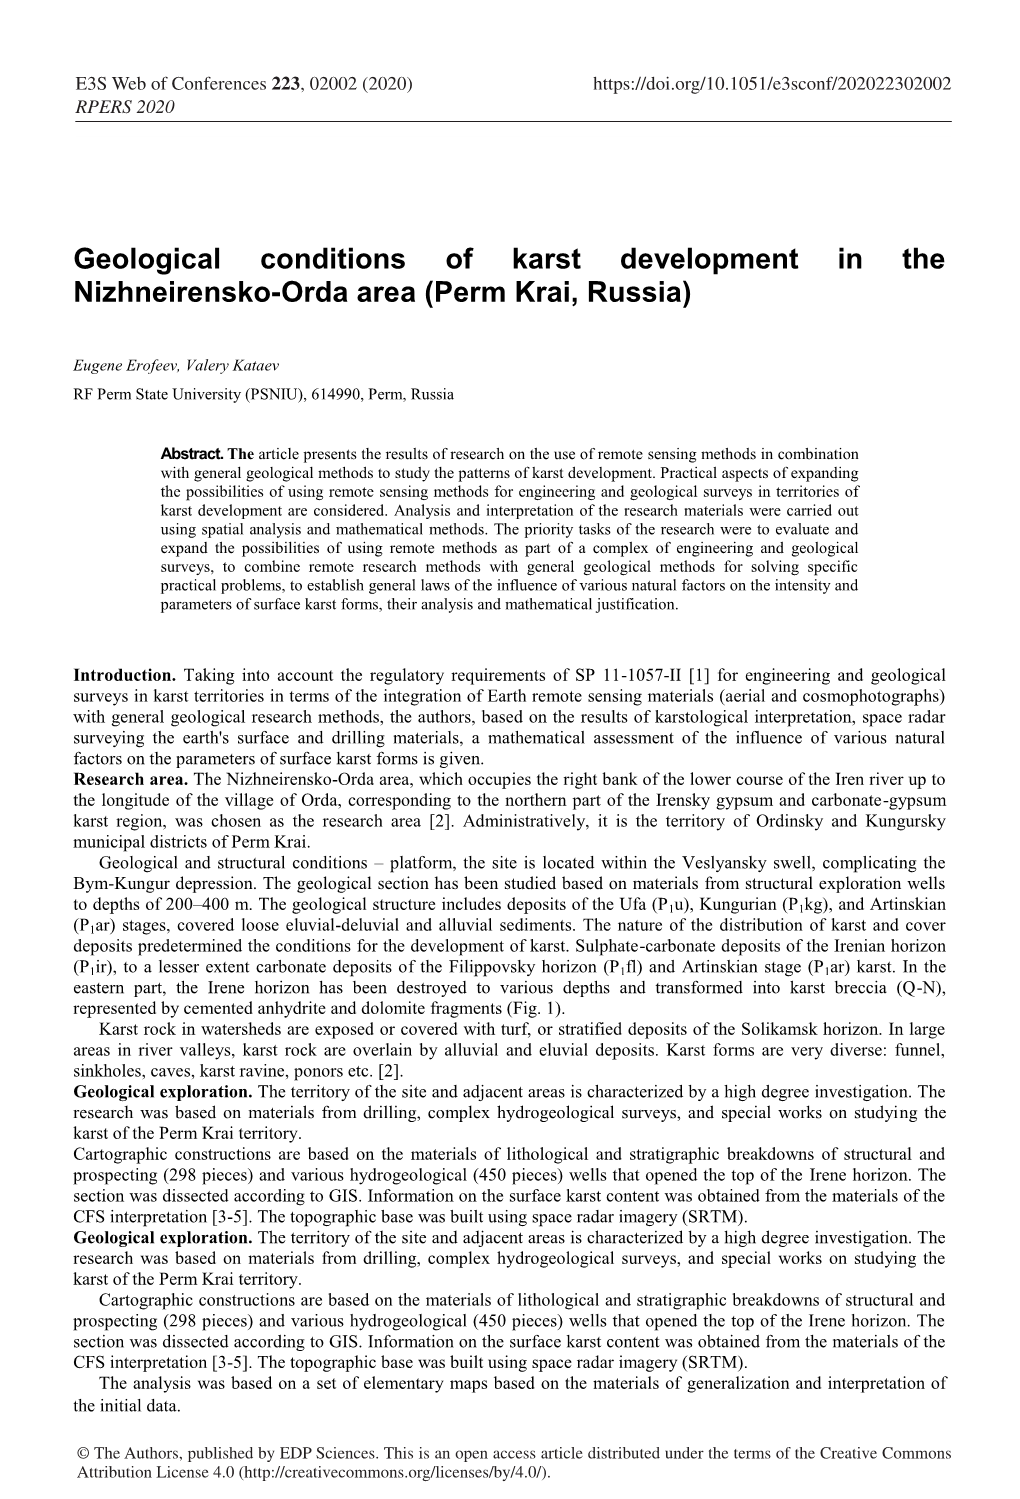 Geological Conditions of Karst Development in the Nizhneirensko-Orda Area (Perm Krai, Russia)